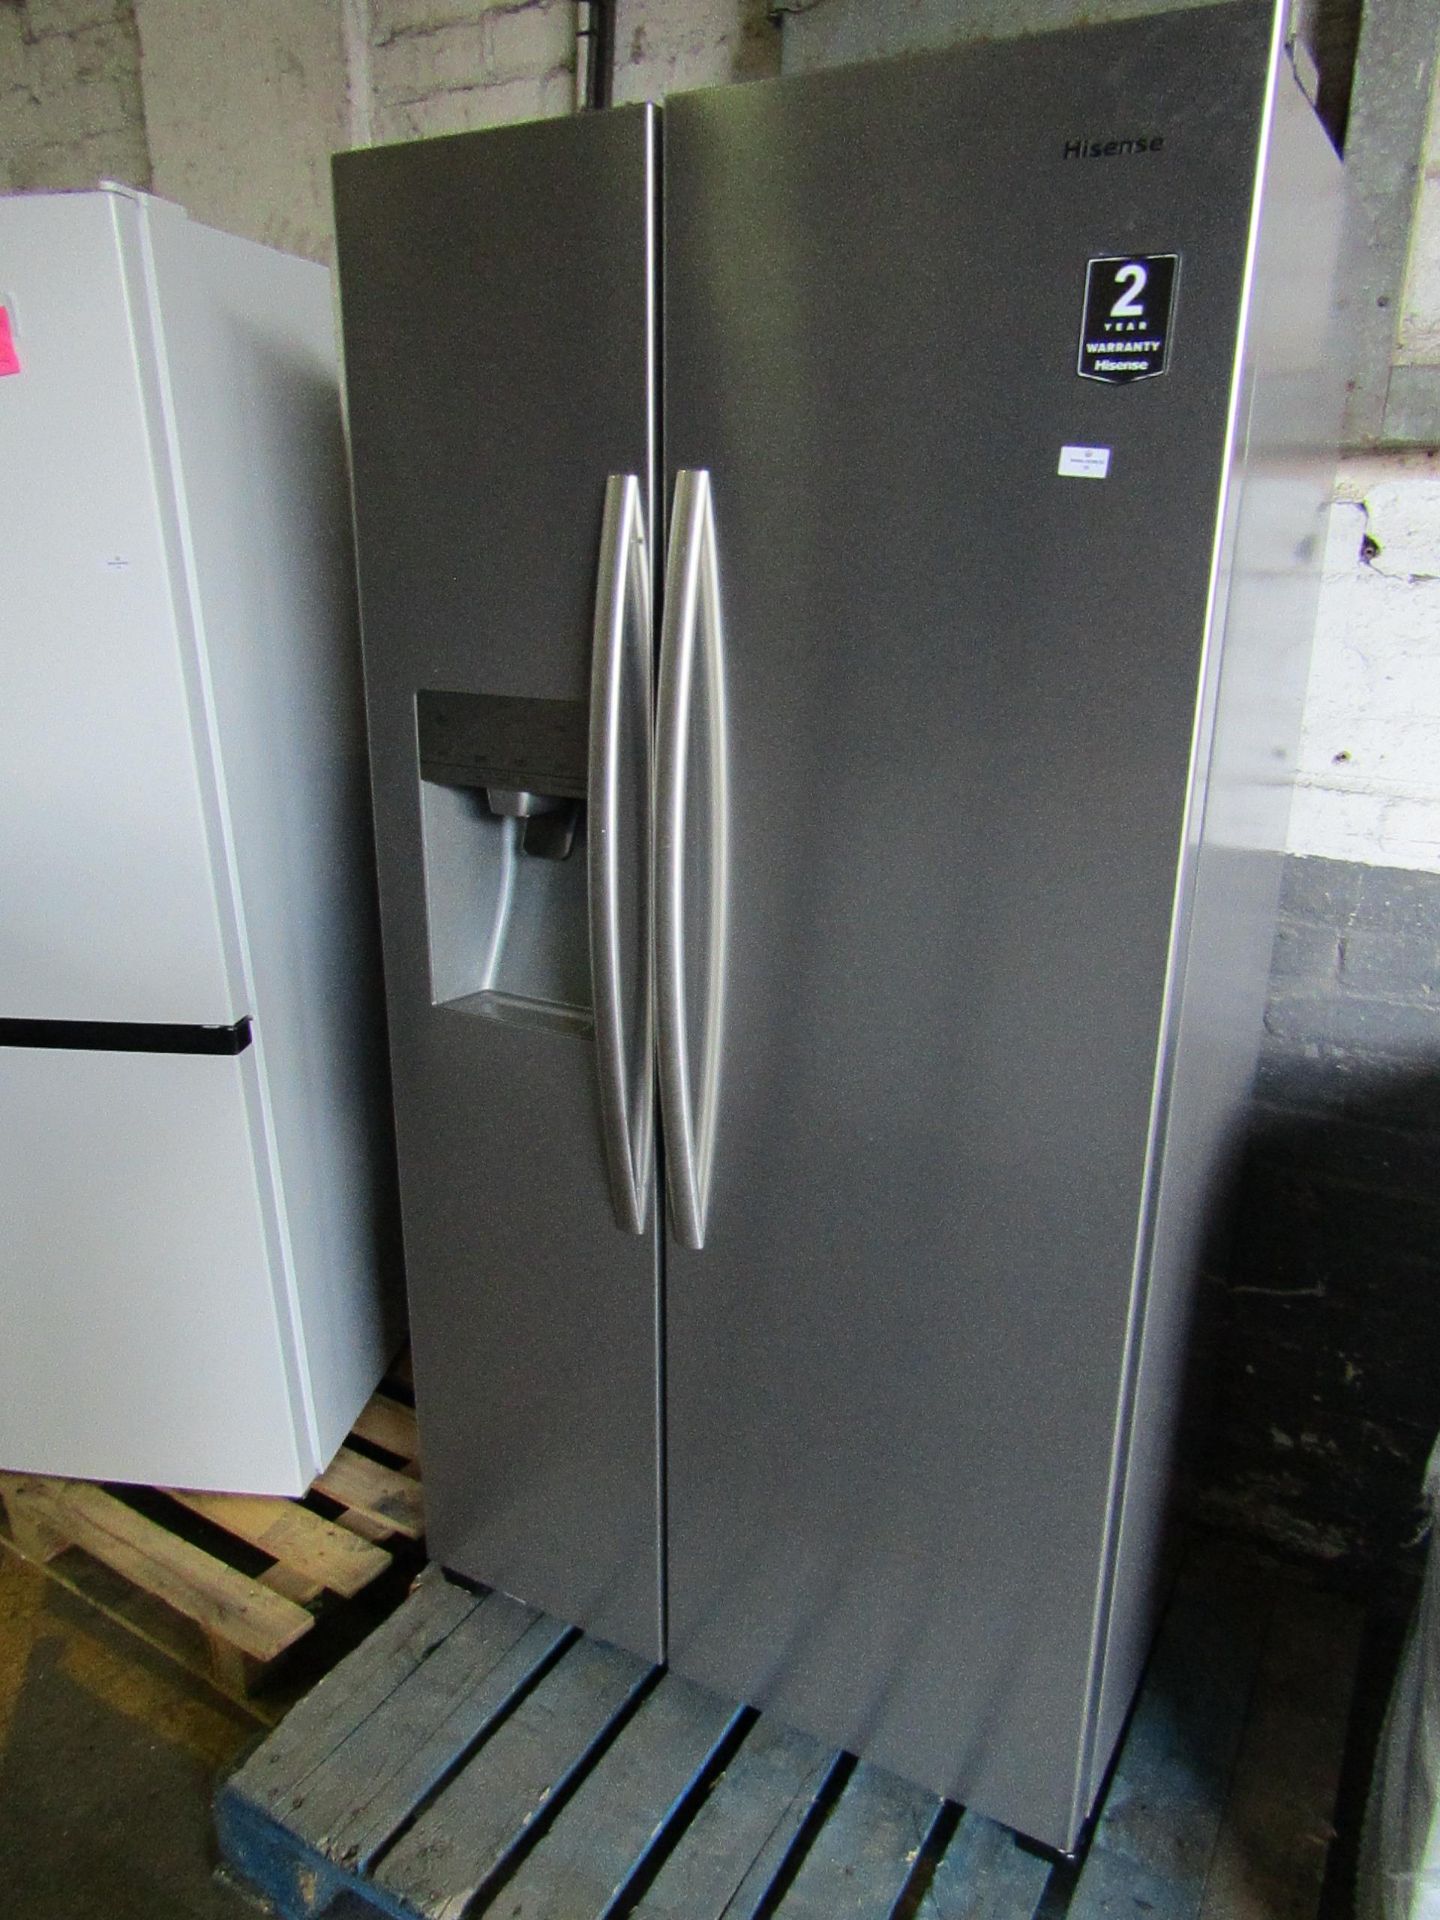 Hisense American fridge freezer, untested due to no plug.